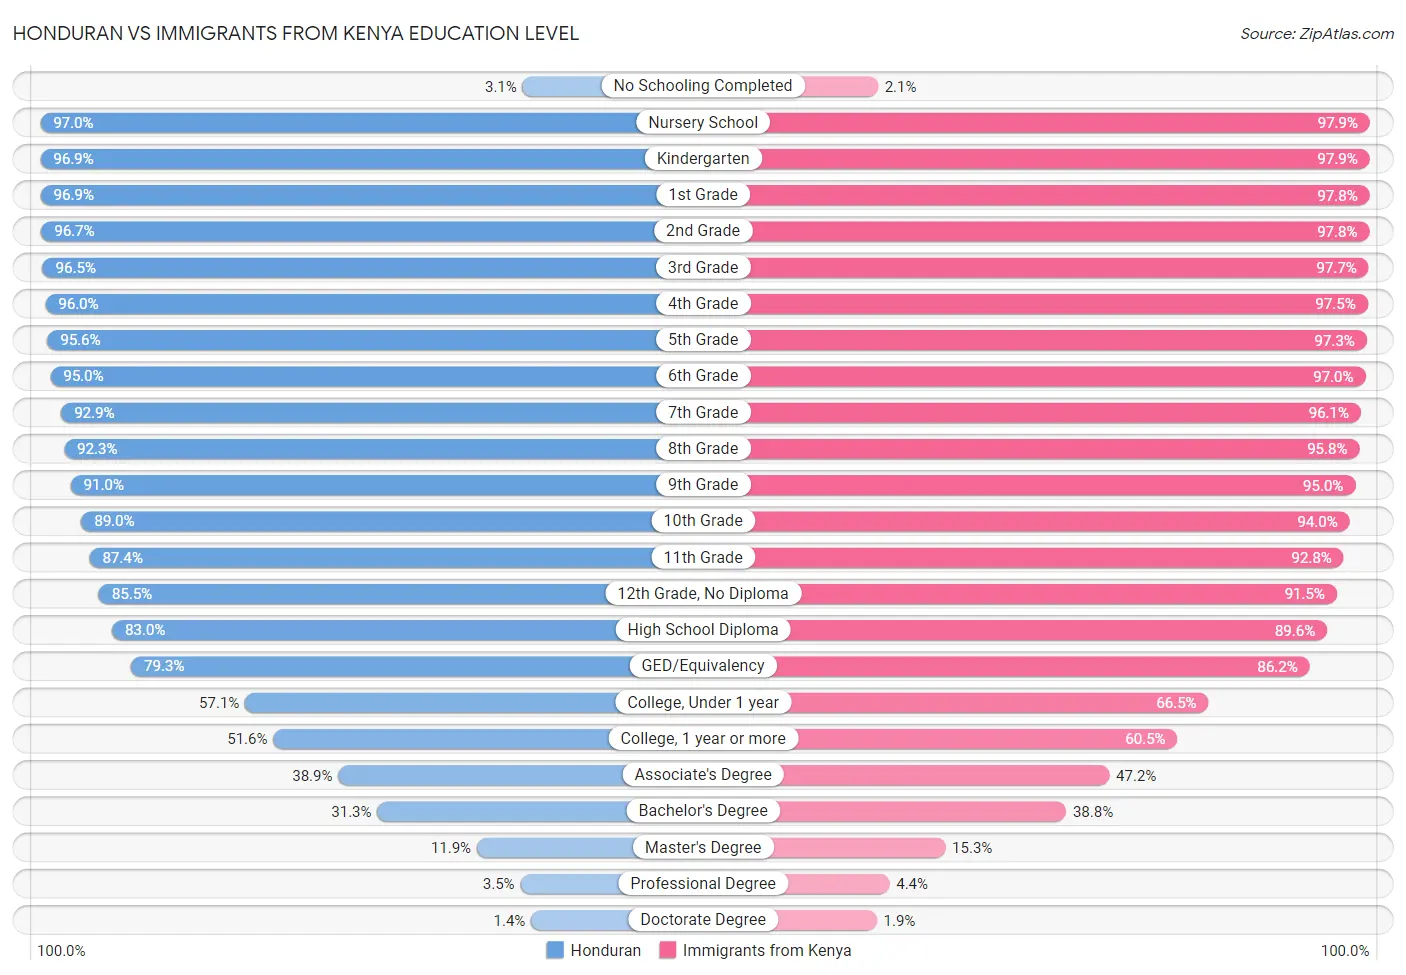 Honduran vs Immigrants from Kenya Education Level